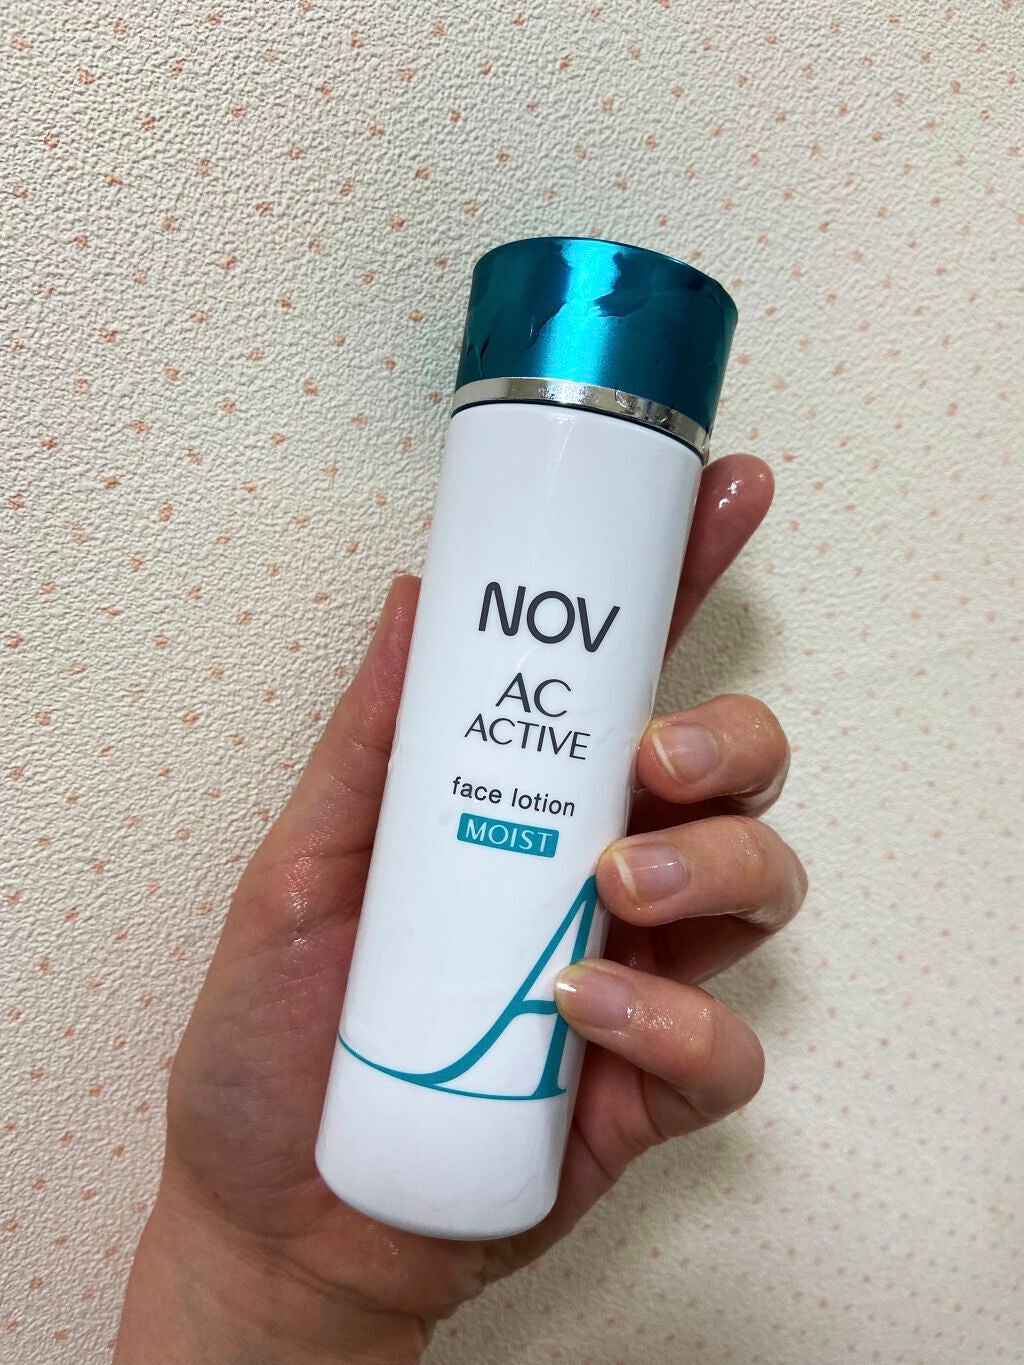 ACアクティブ フェイスローション モイスト/NOV/化粧水 by NR7cat